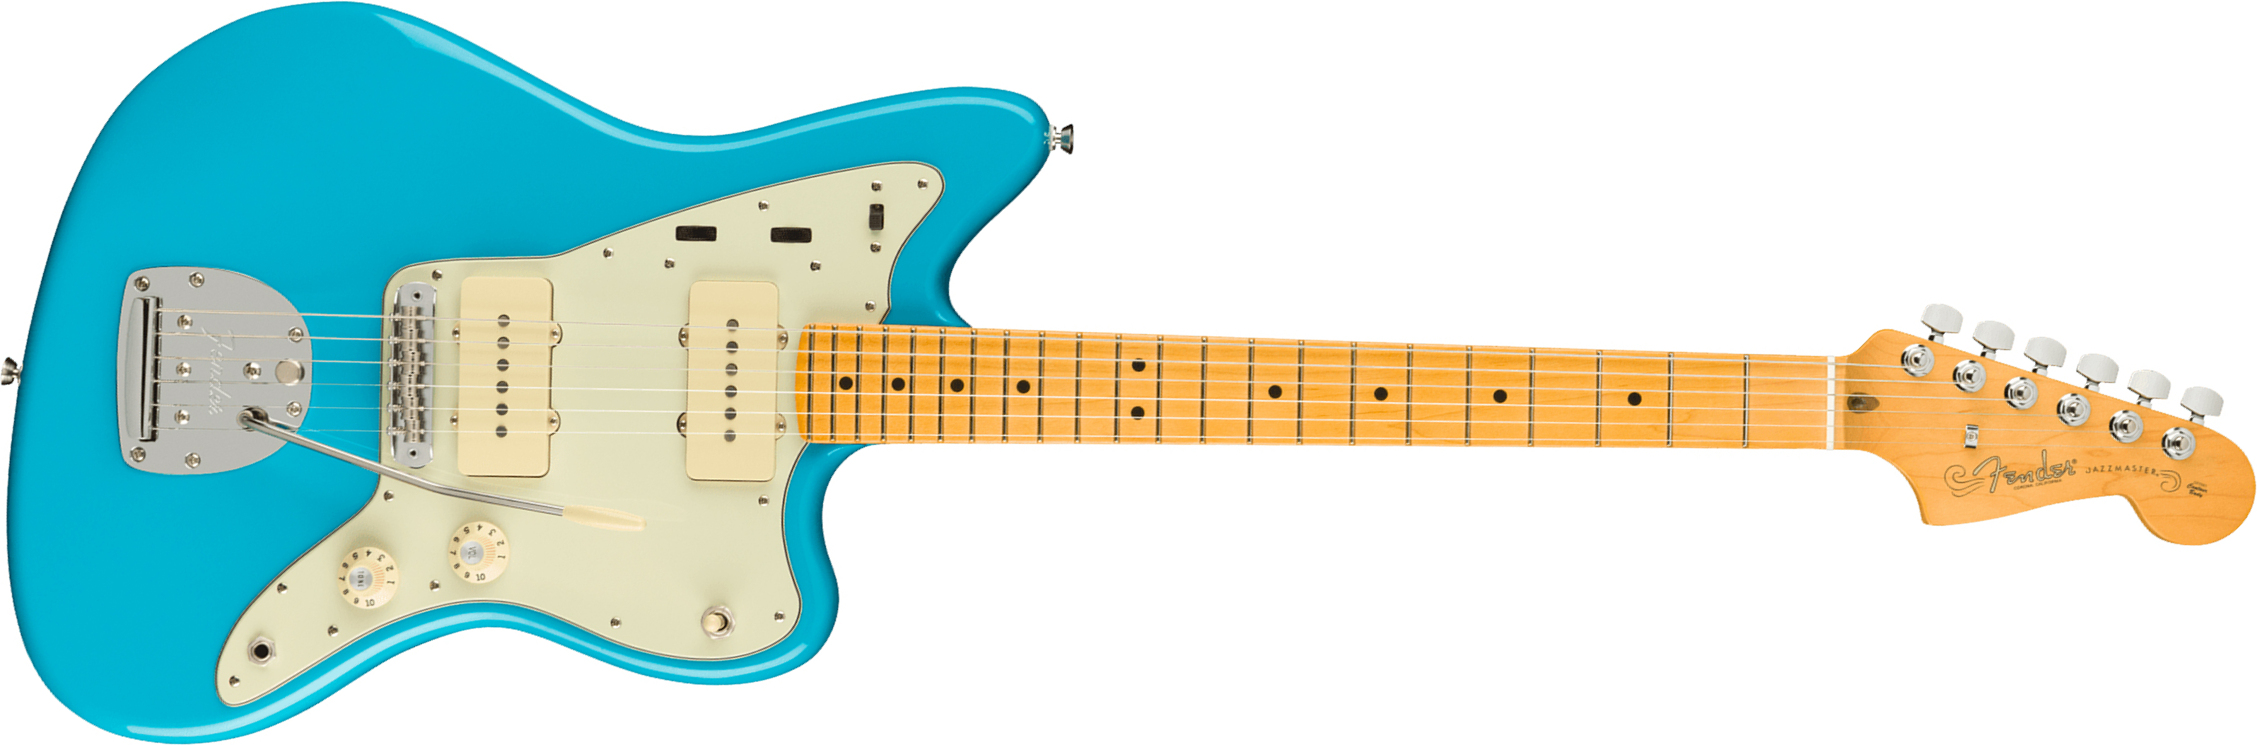 Fender Jazzmaster American Professional Ii Usa Rw - Miami Blue - Guitarra electrica retro rock - Main picture